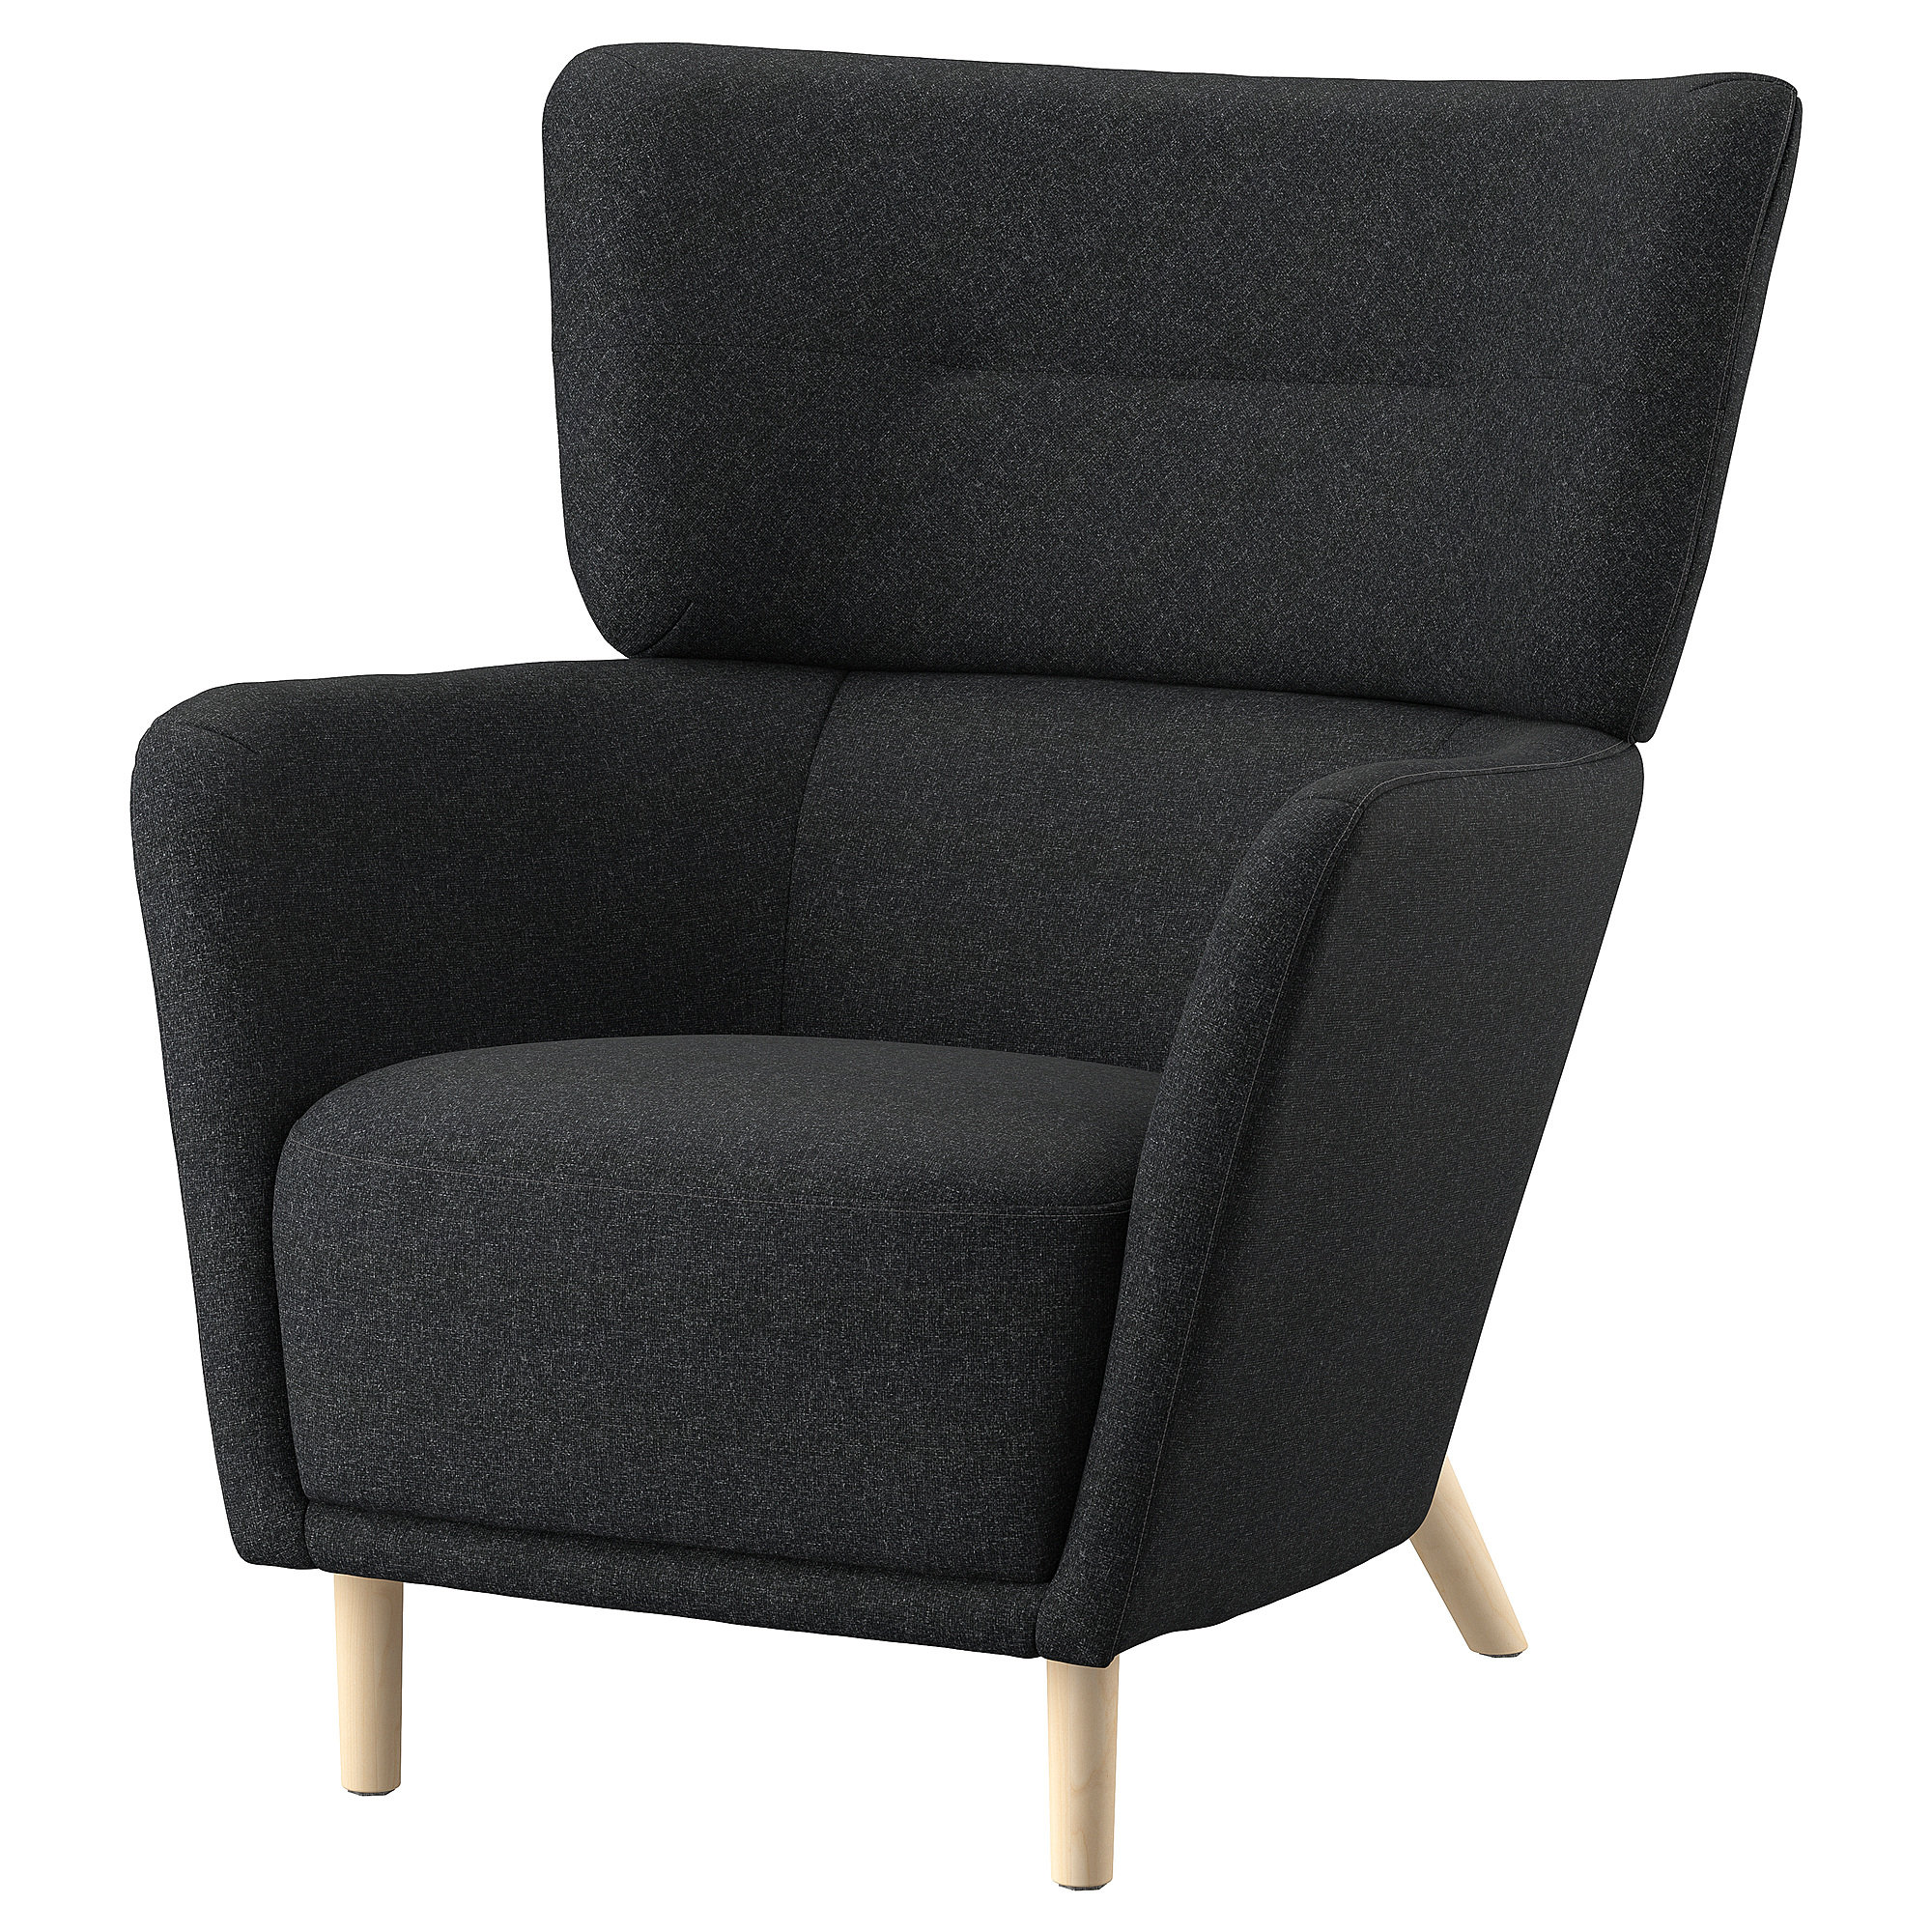 OSKARSHAMN - 扶手椅, Gunnared 灰黑色| IKEA 香港及澳門